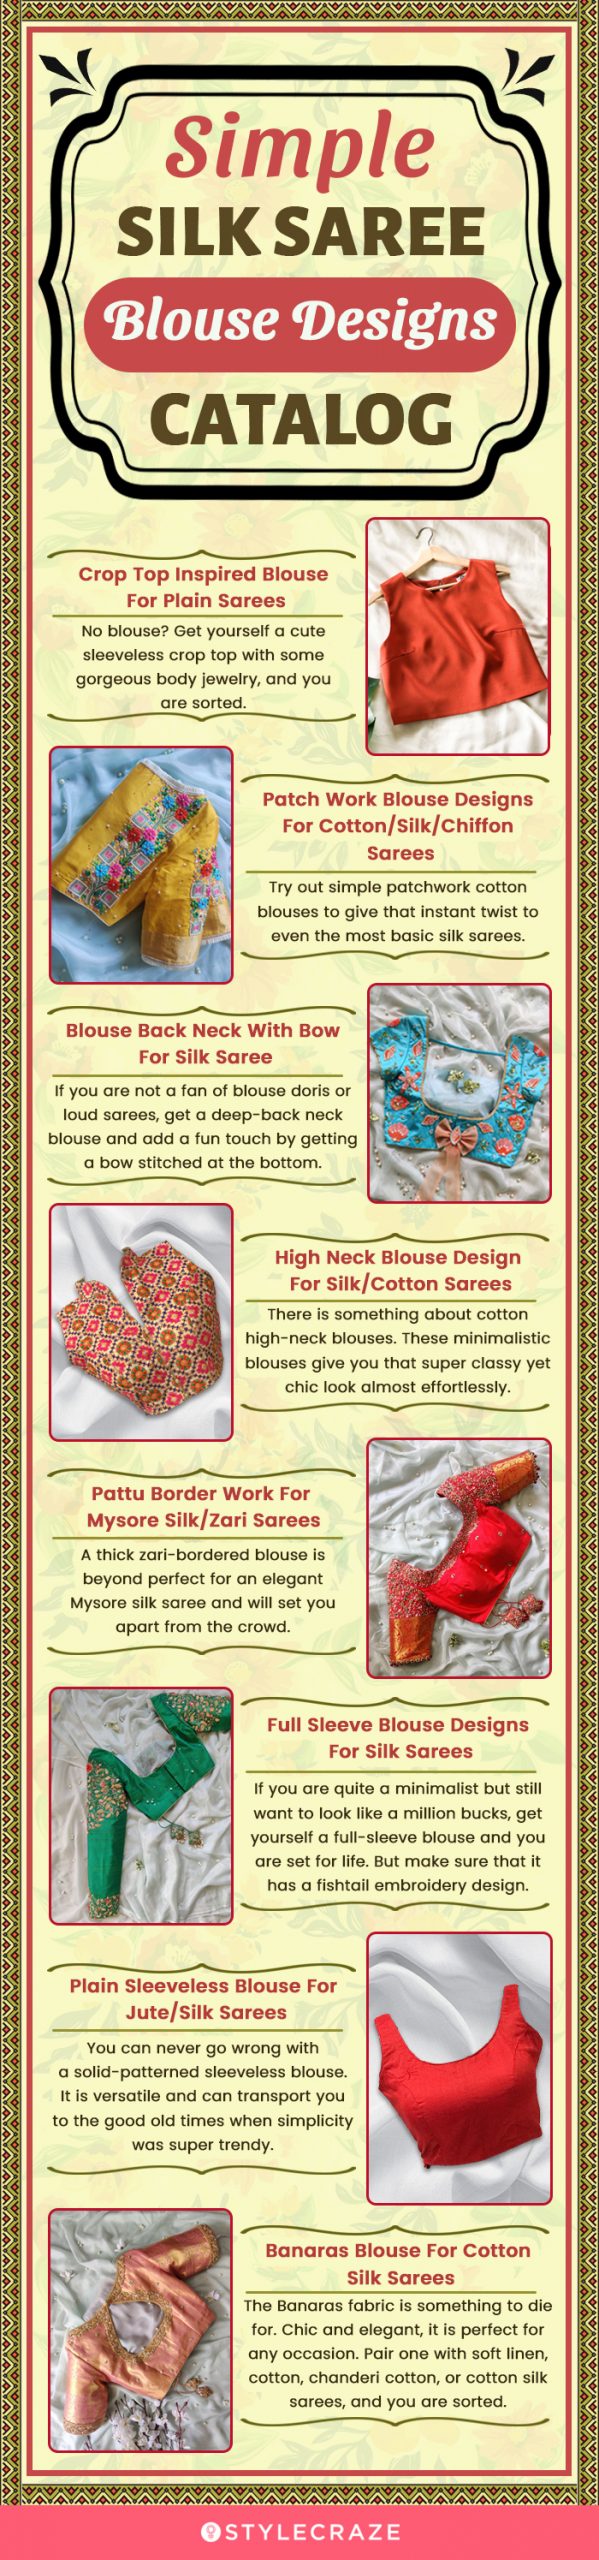 simple silk saree blouse designs catalog [infographic]